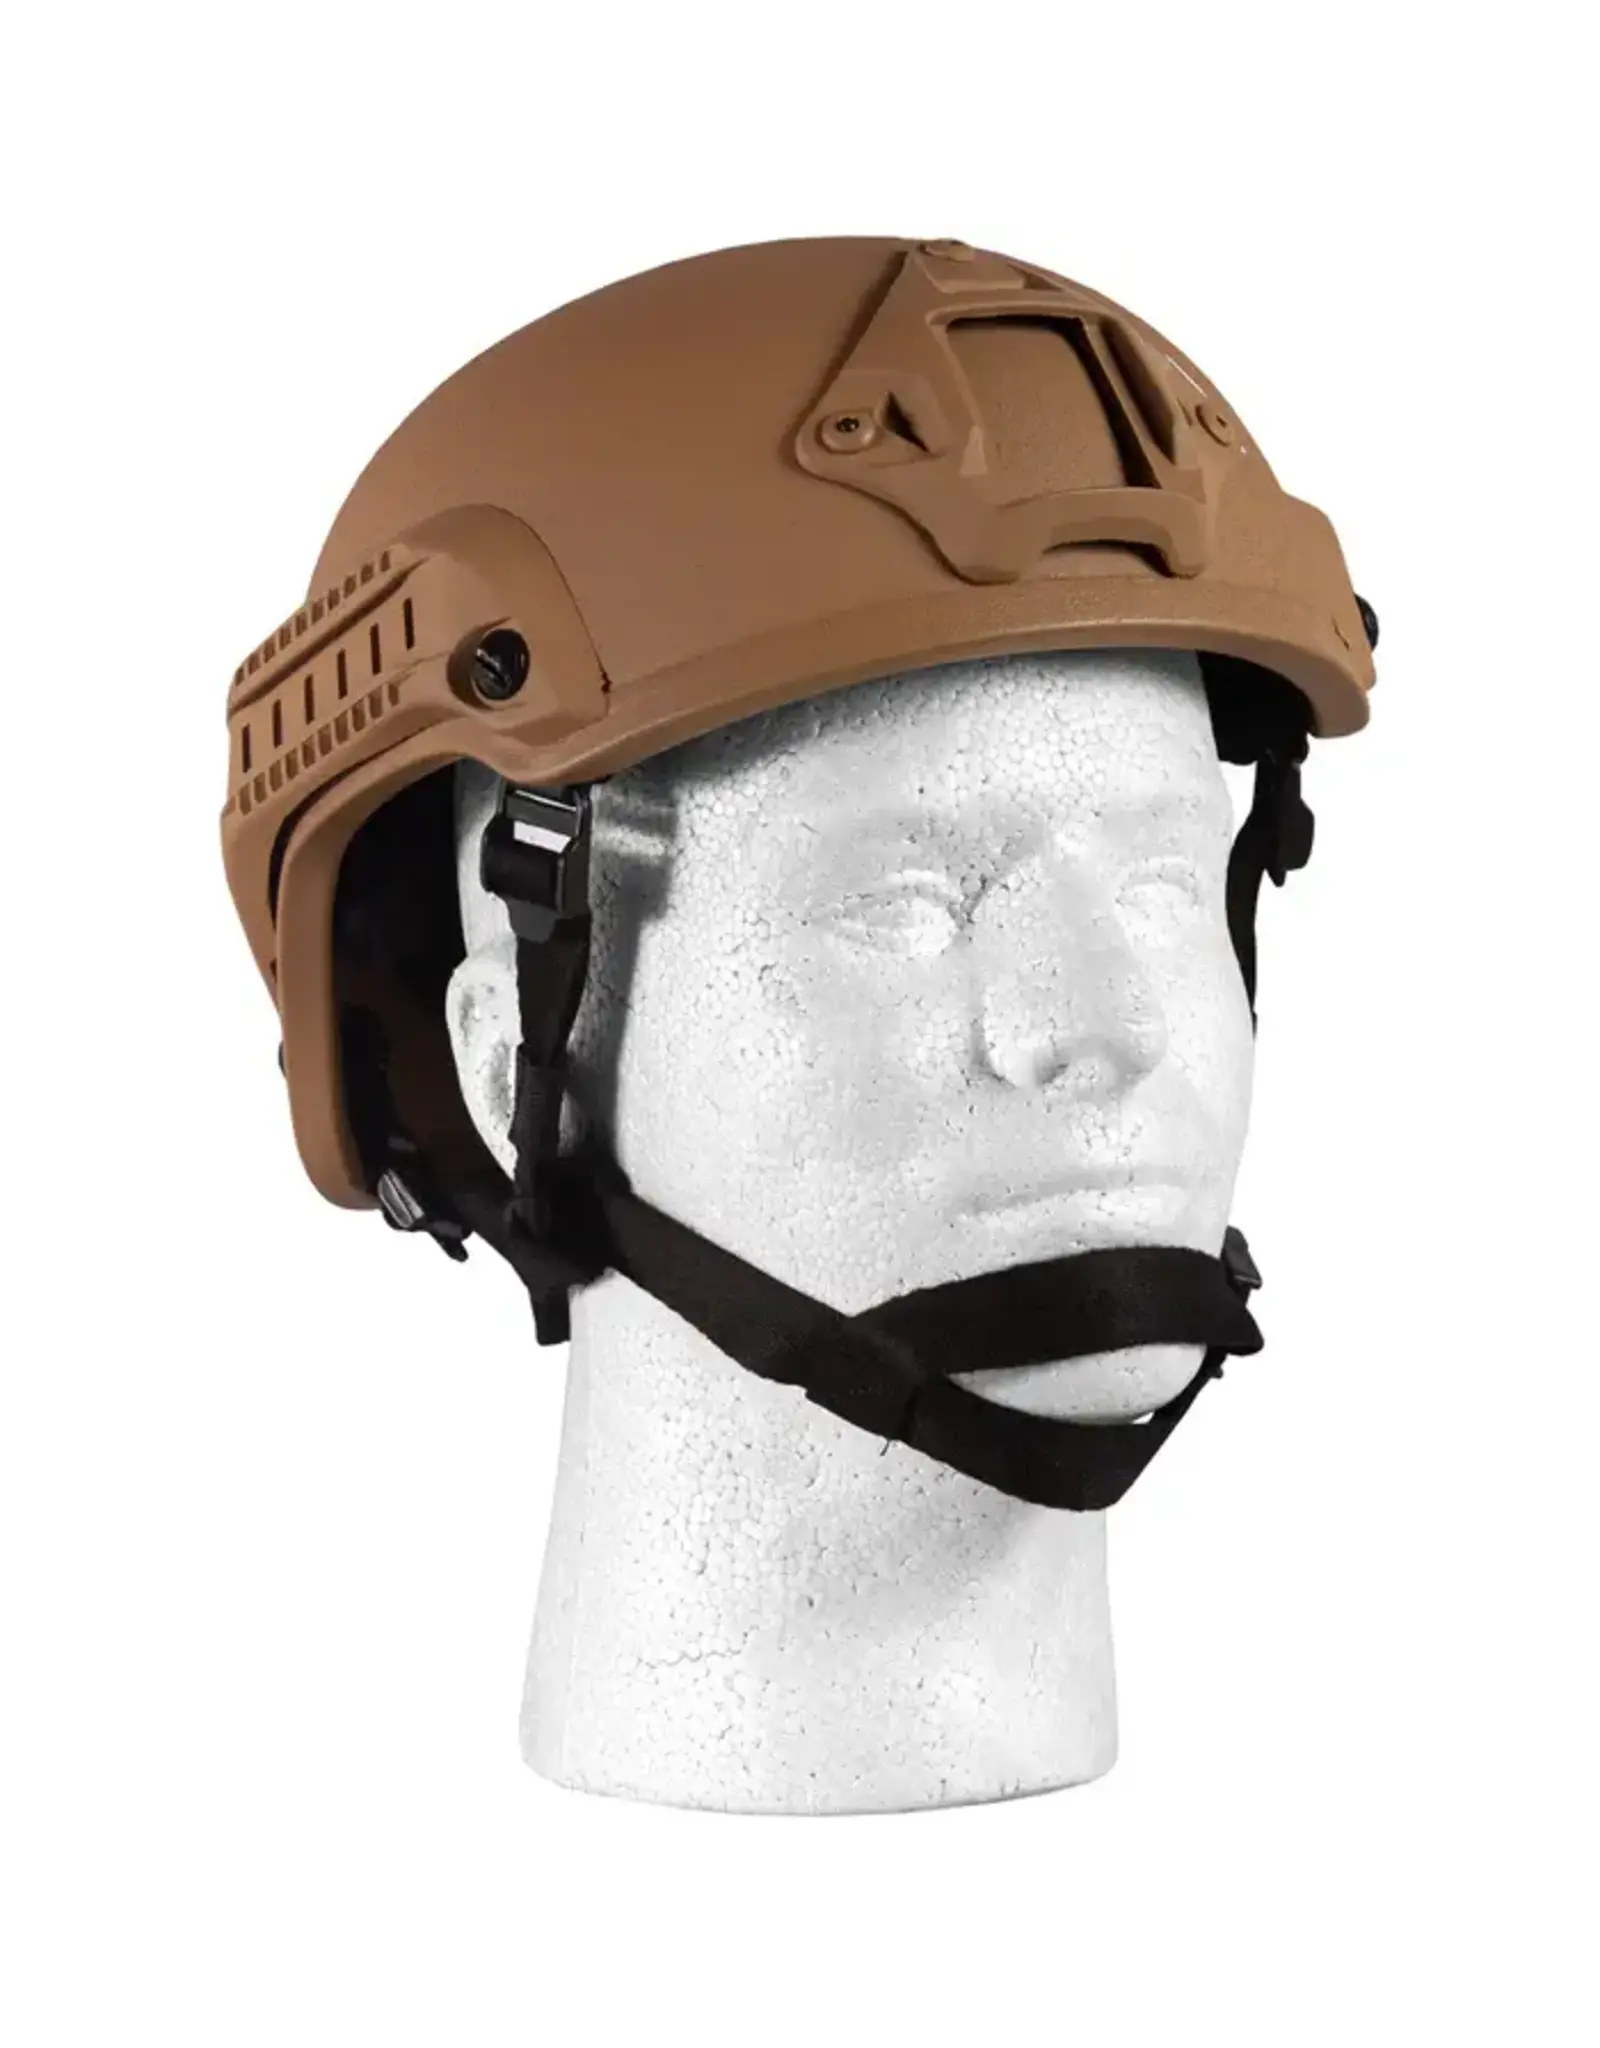 Battle Airsoft Helmet